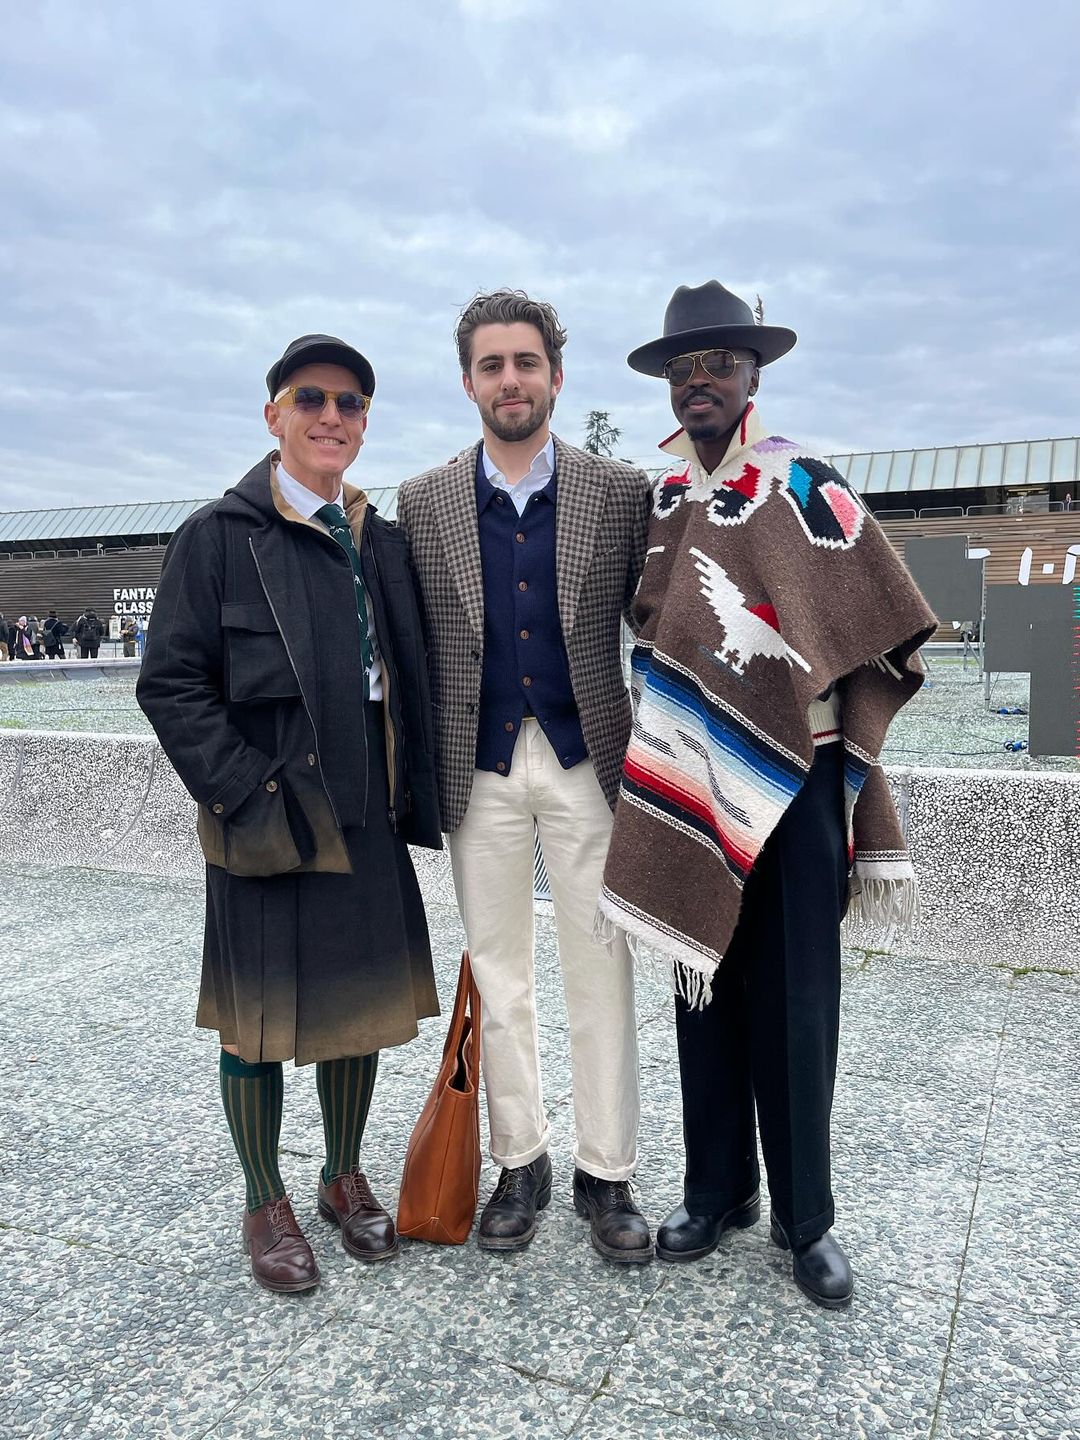 Three gentlemen pose for a photo outside the Pitti Uomo tradeshow